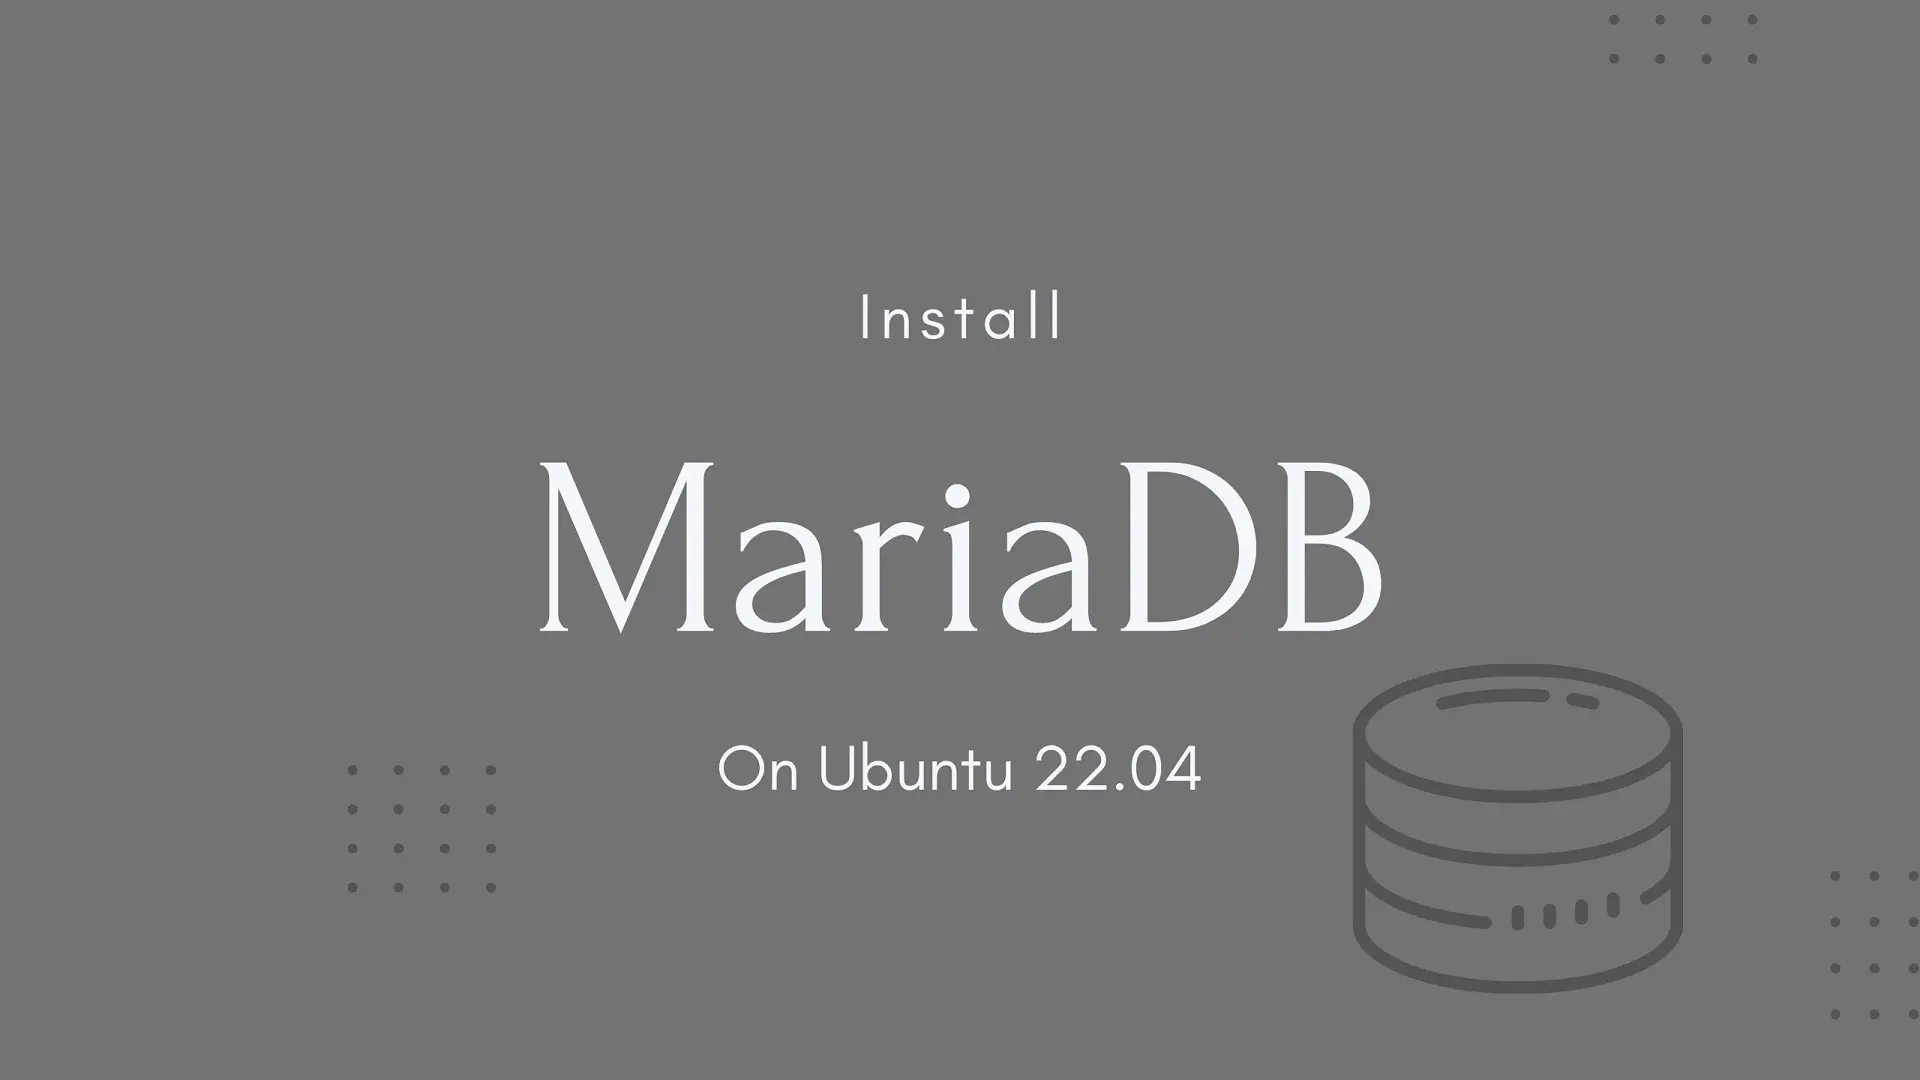 Install MariaDB on Ubuntu 22.04